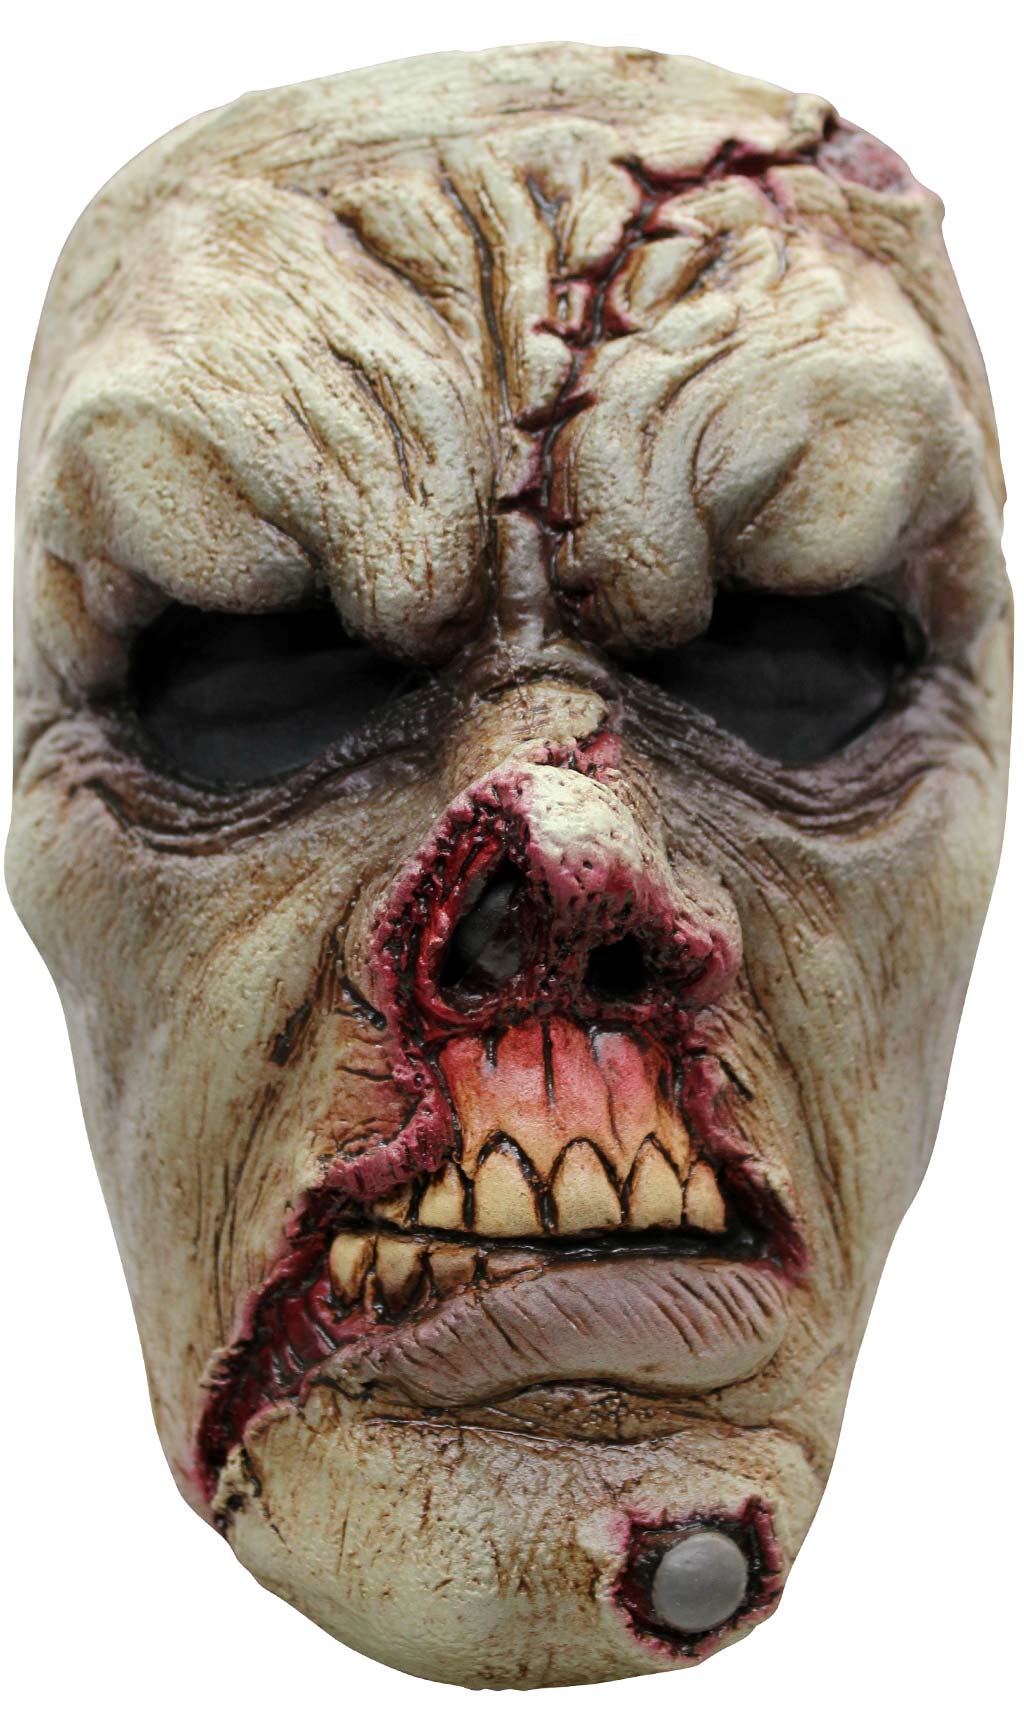 Zombie-mit-Warze-Maske aus Latex